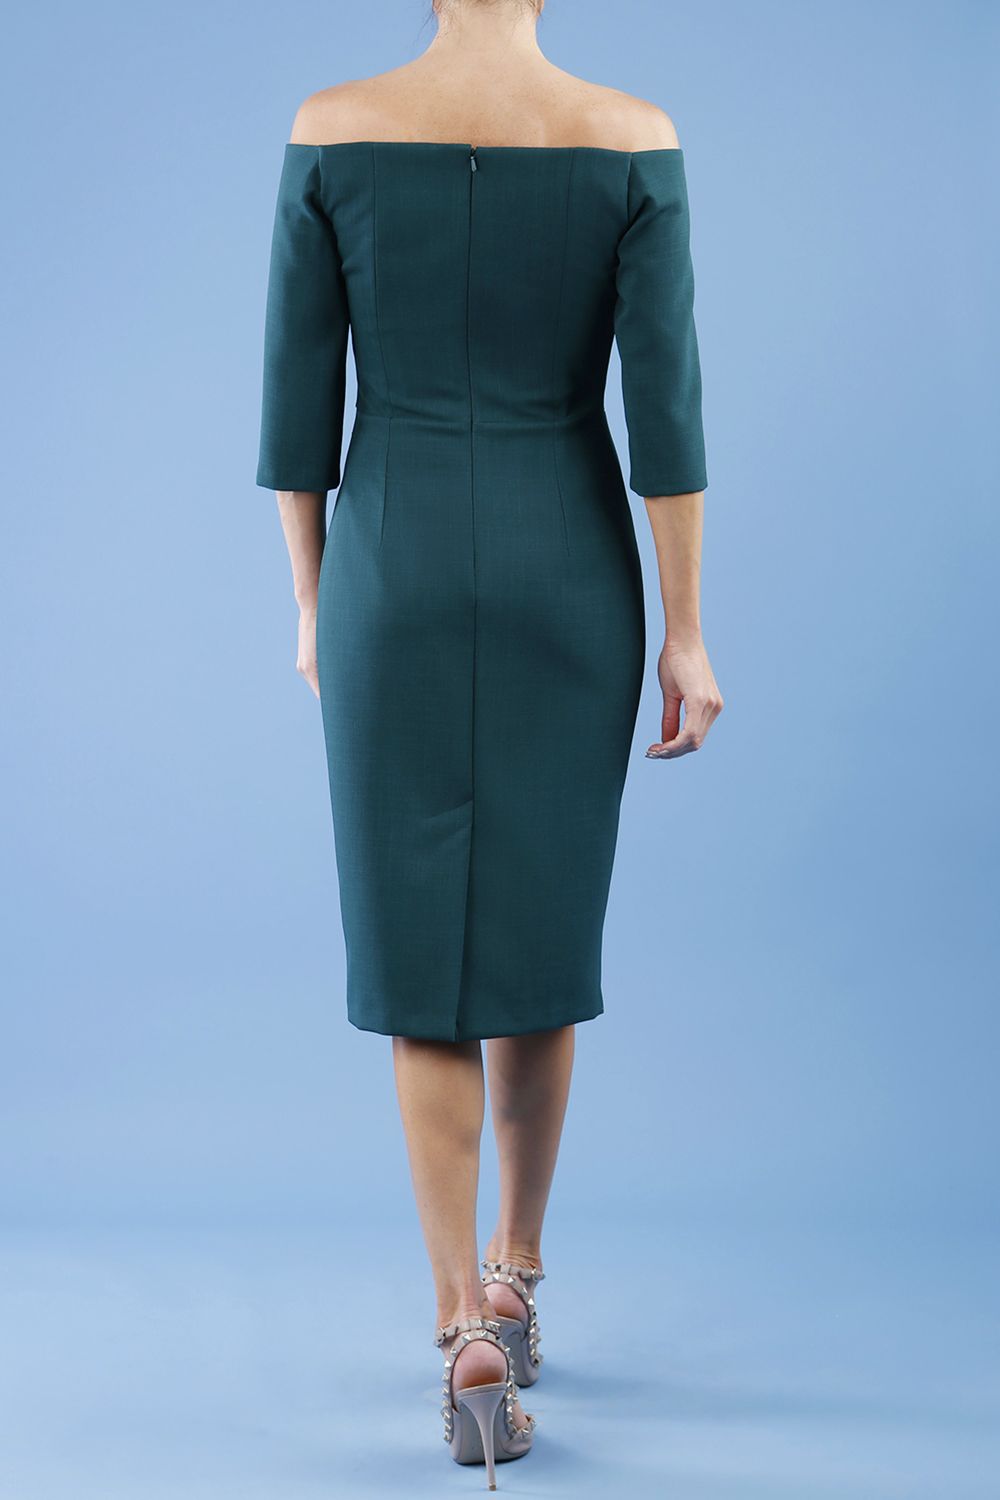 model is wearing diva catwalk lauren odd shoulder asymmetric neckline pencil dress with sleeves in forest green back